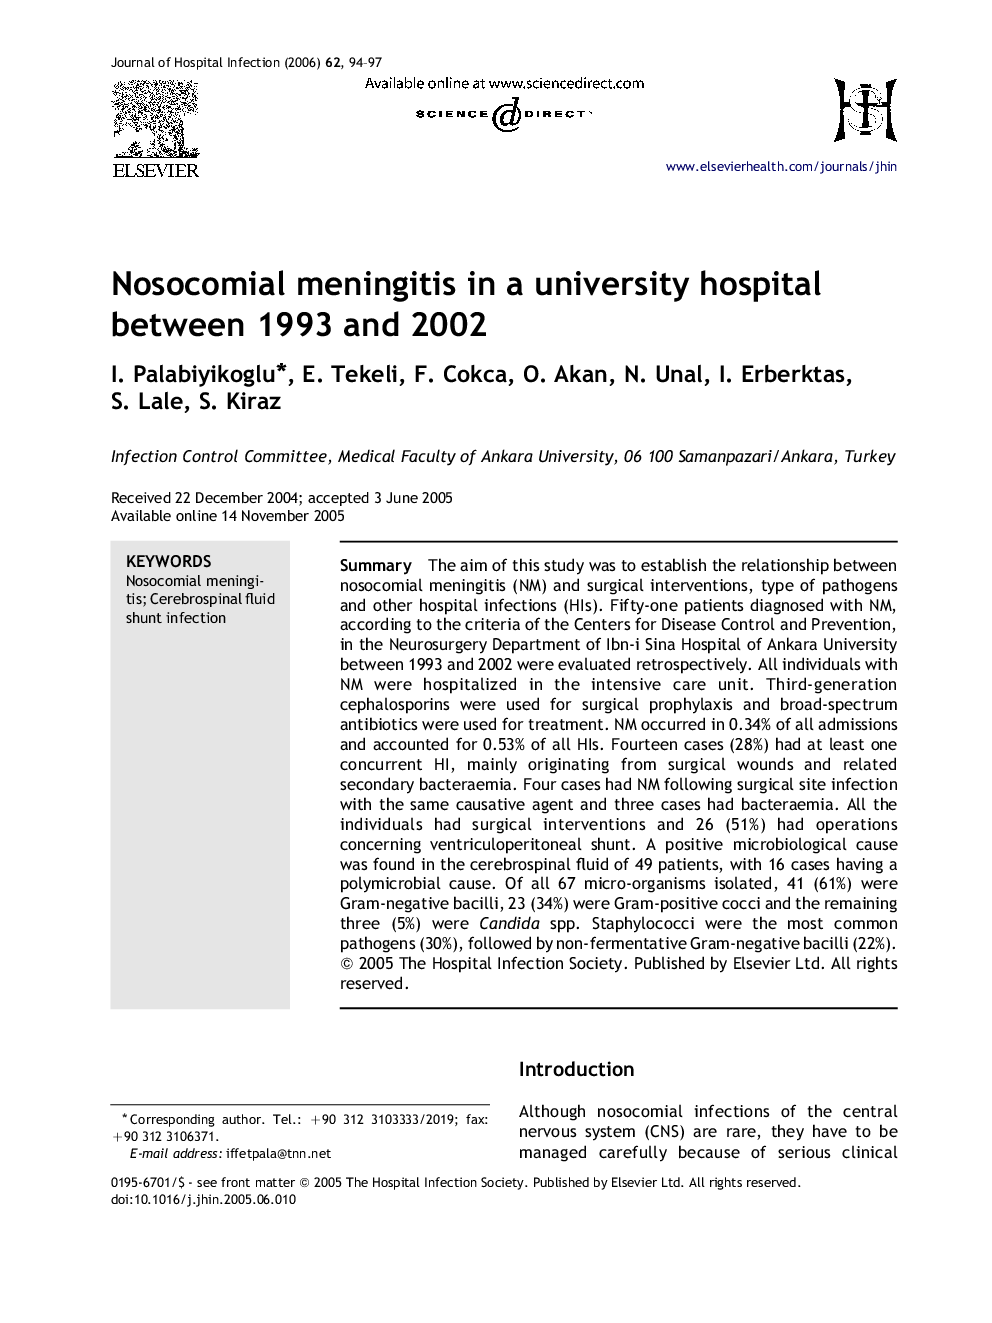 Nosocomial meningitis in a university hospital between 1993 and 2002